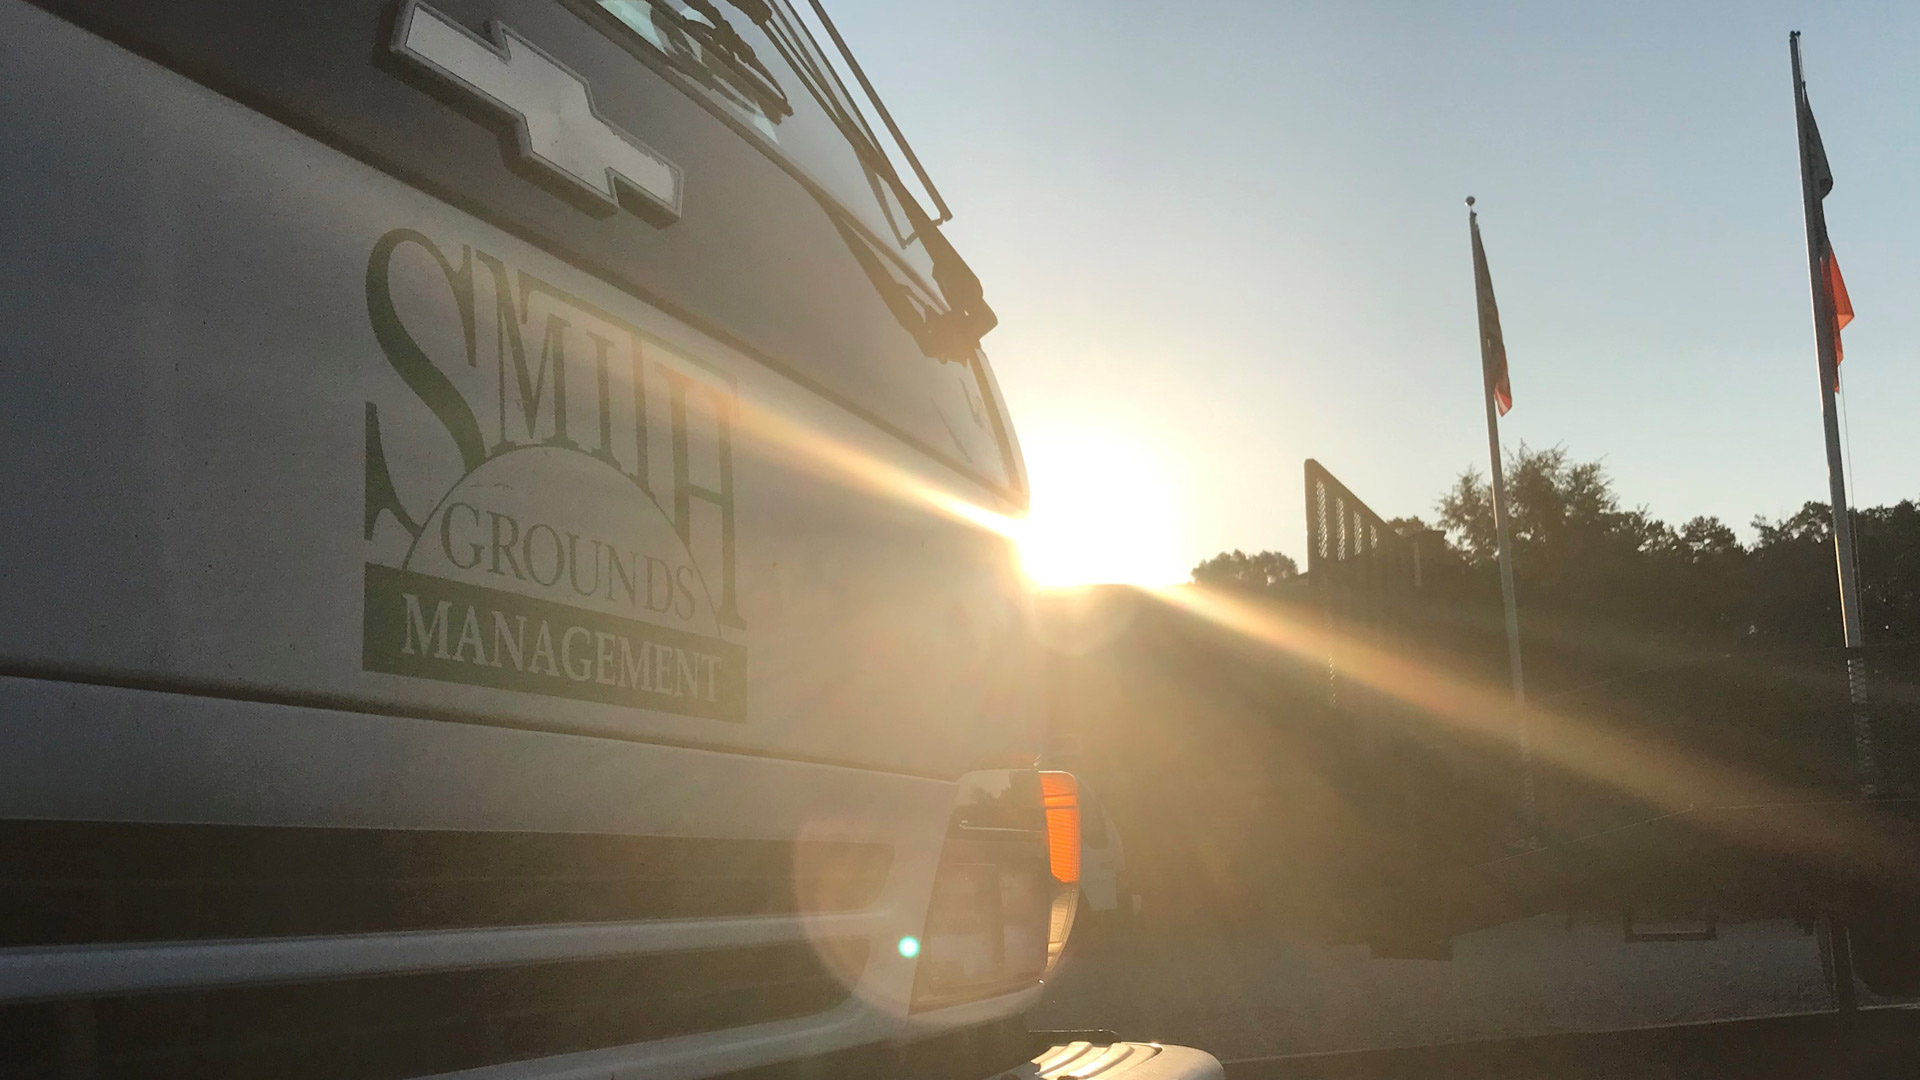 Branded work van shown with sun glare in the background in Matthews, NC.